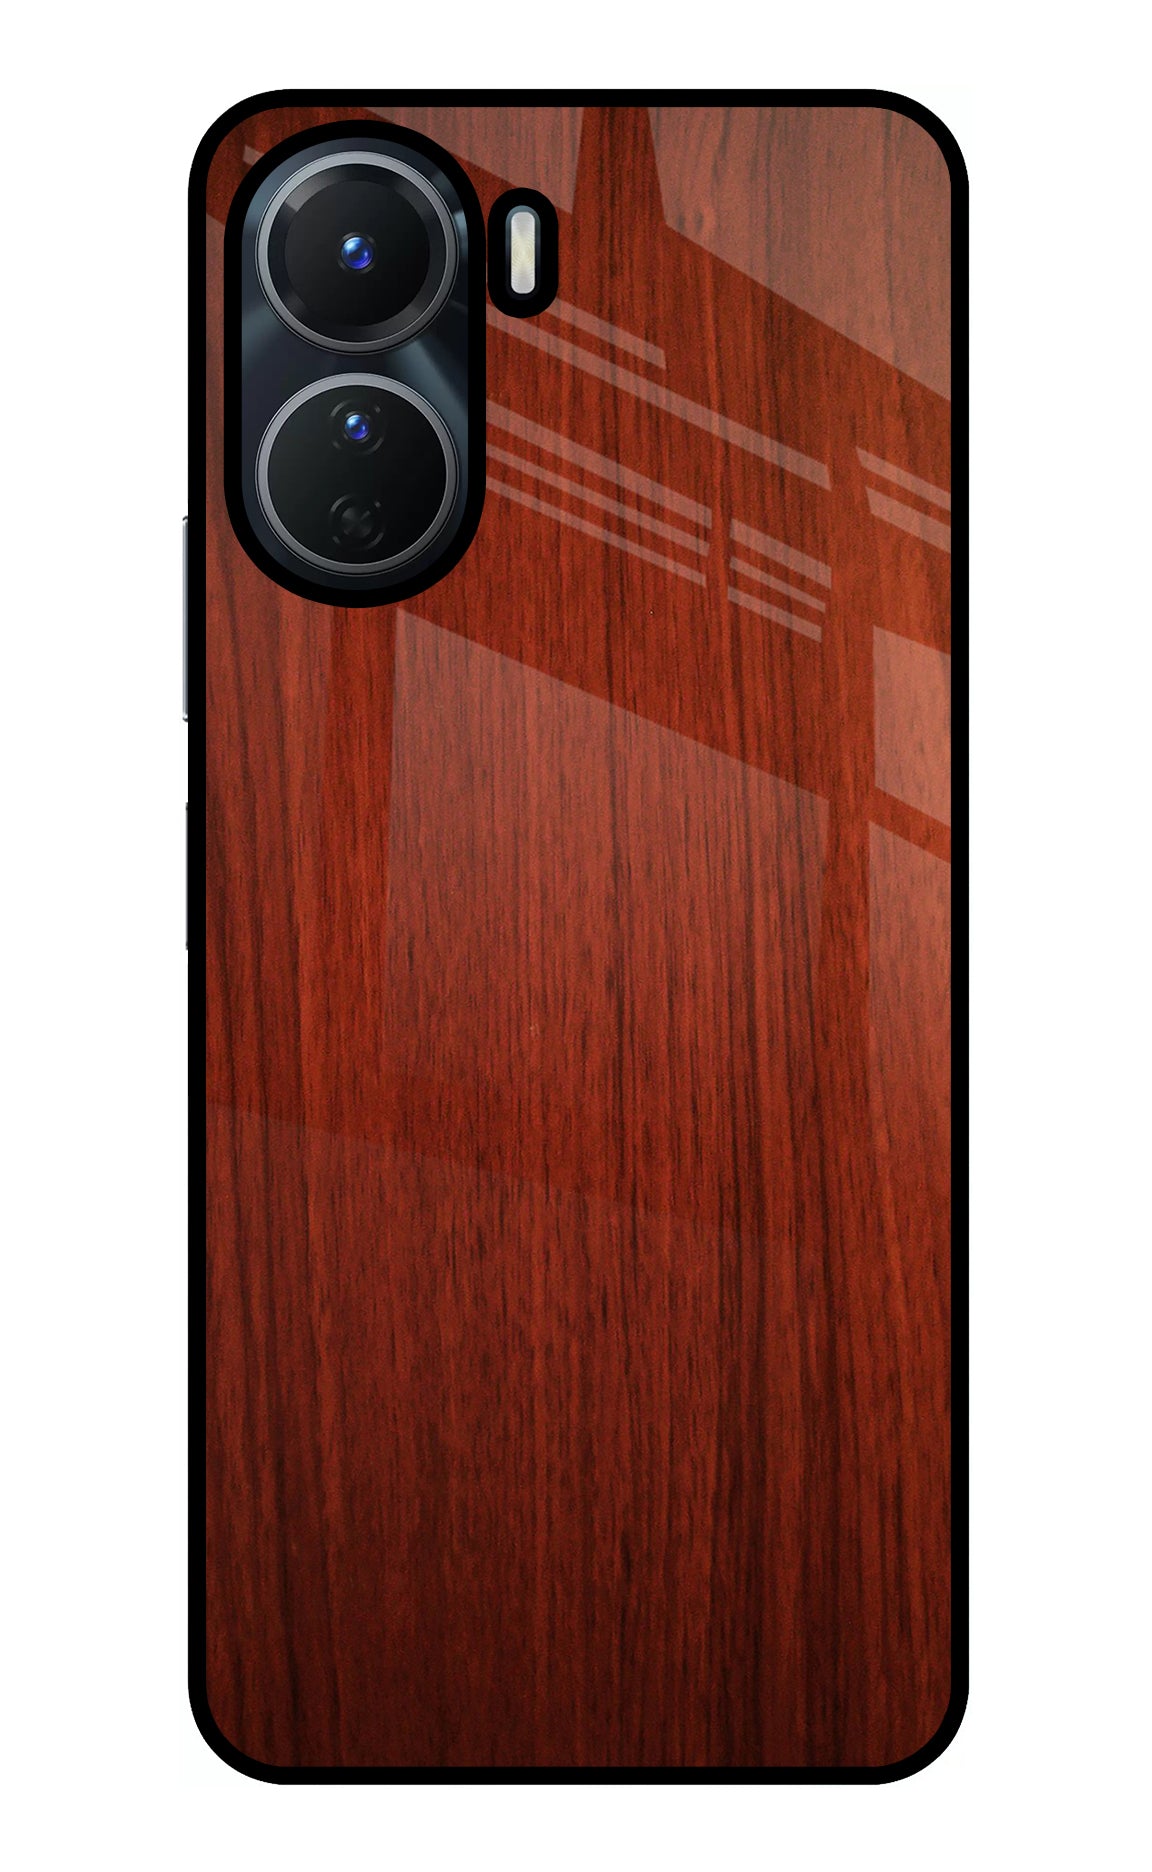 Wooden Plain Pattern Vivo T2x 5G Back Cover